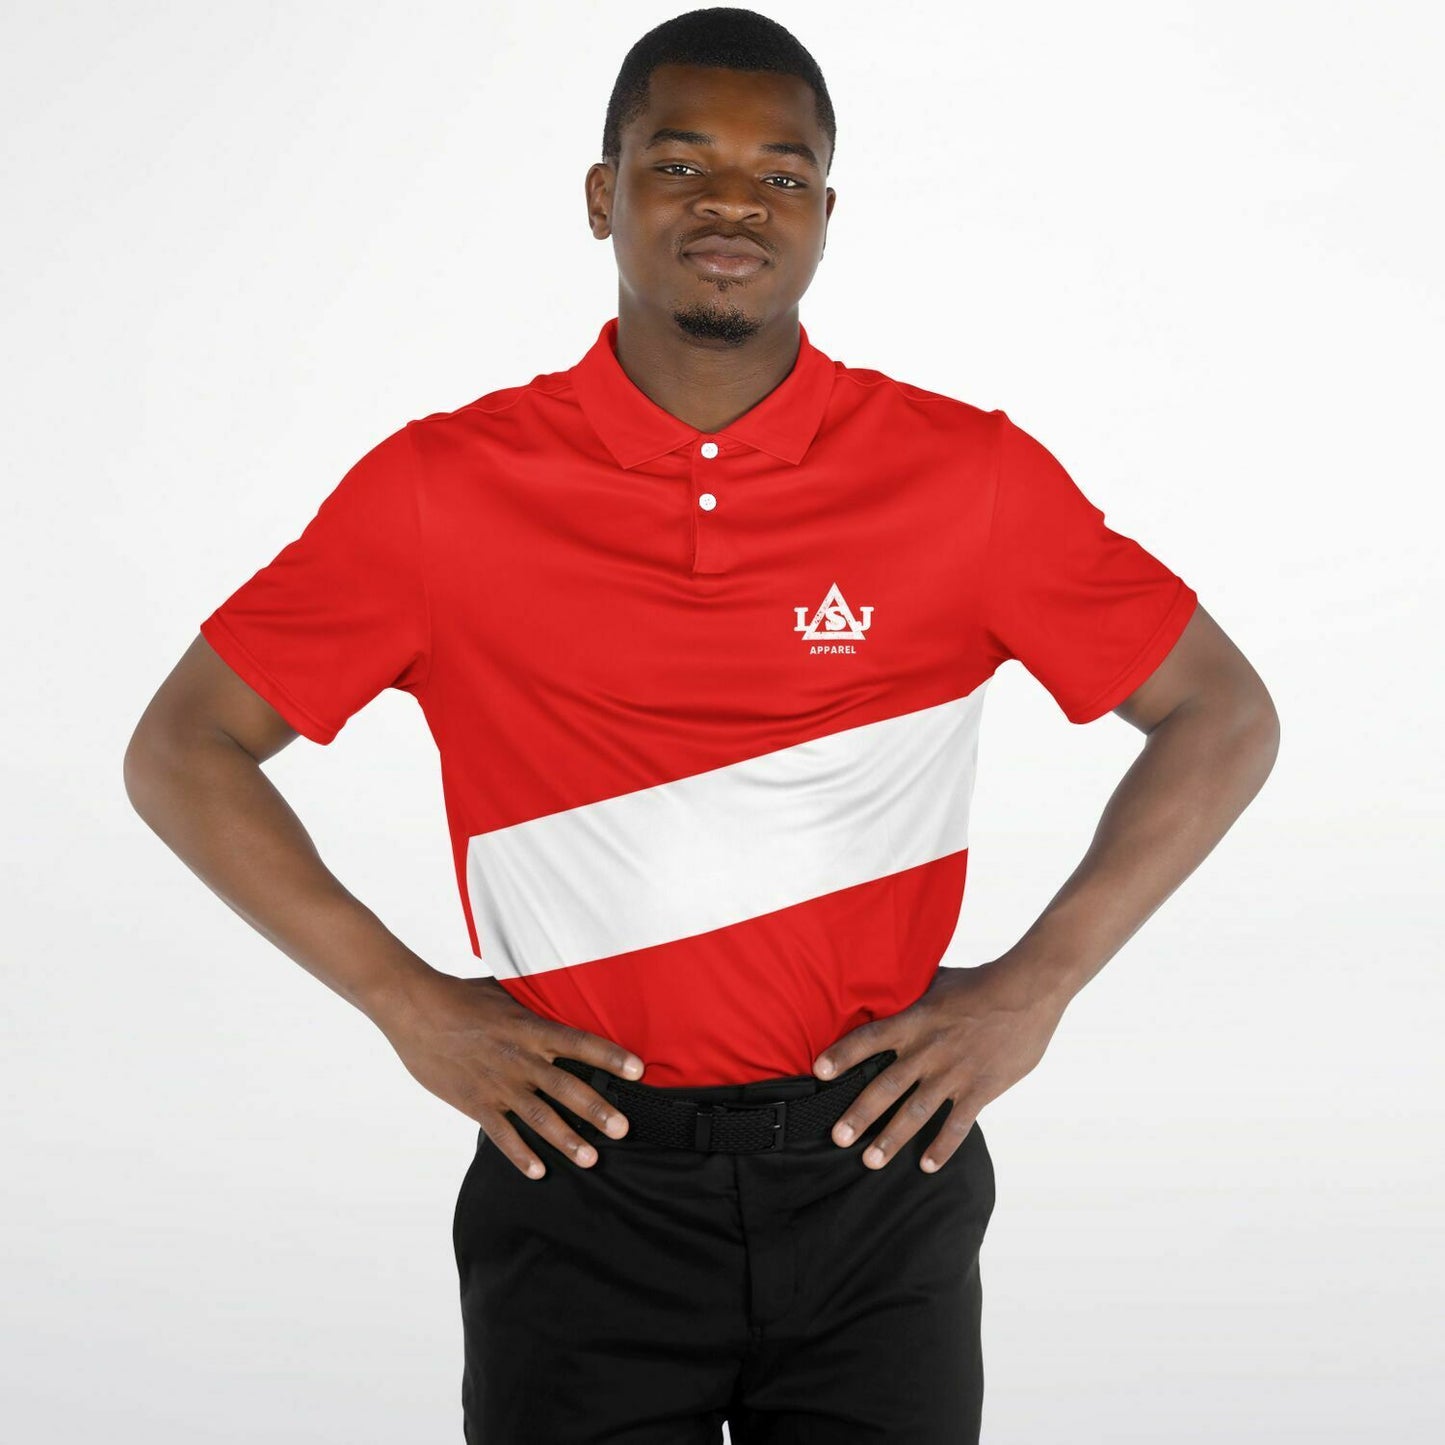 LSJ Red & White Men's Polo Shirt